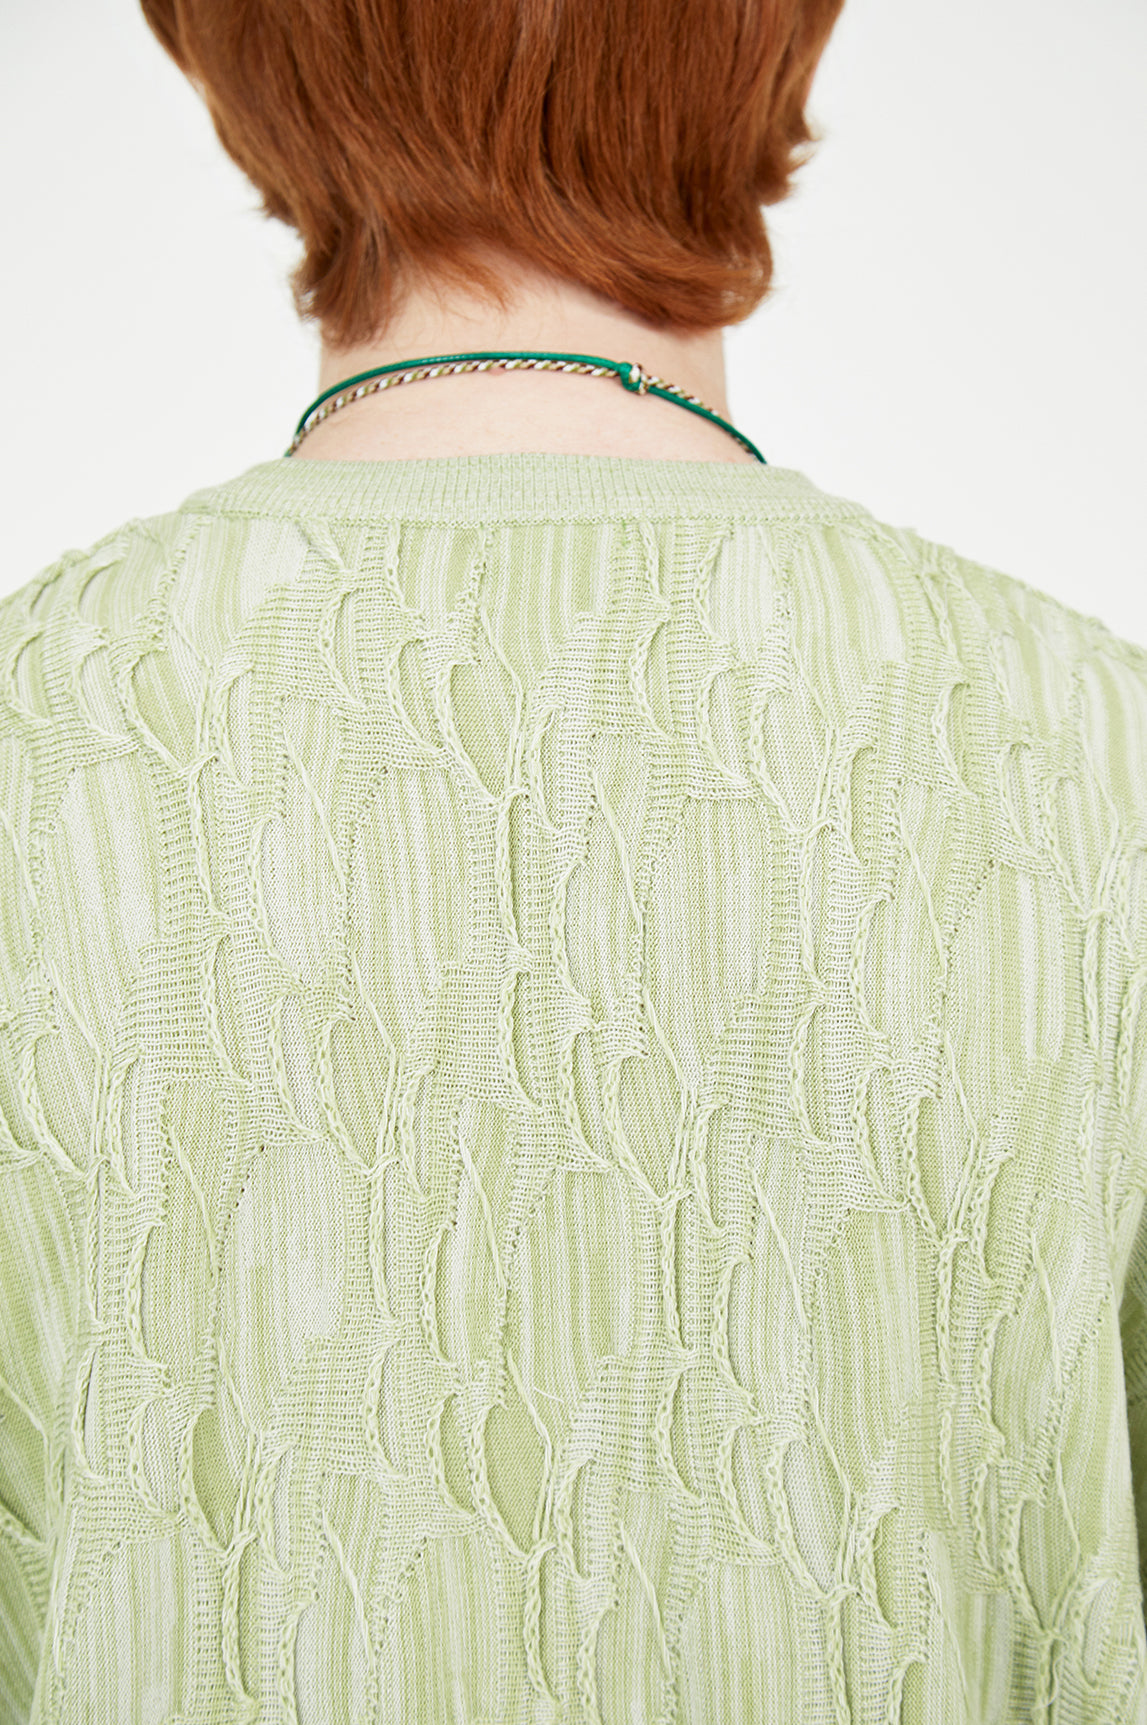 Net overfit knit (Lime)